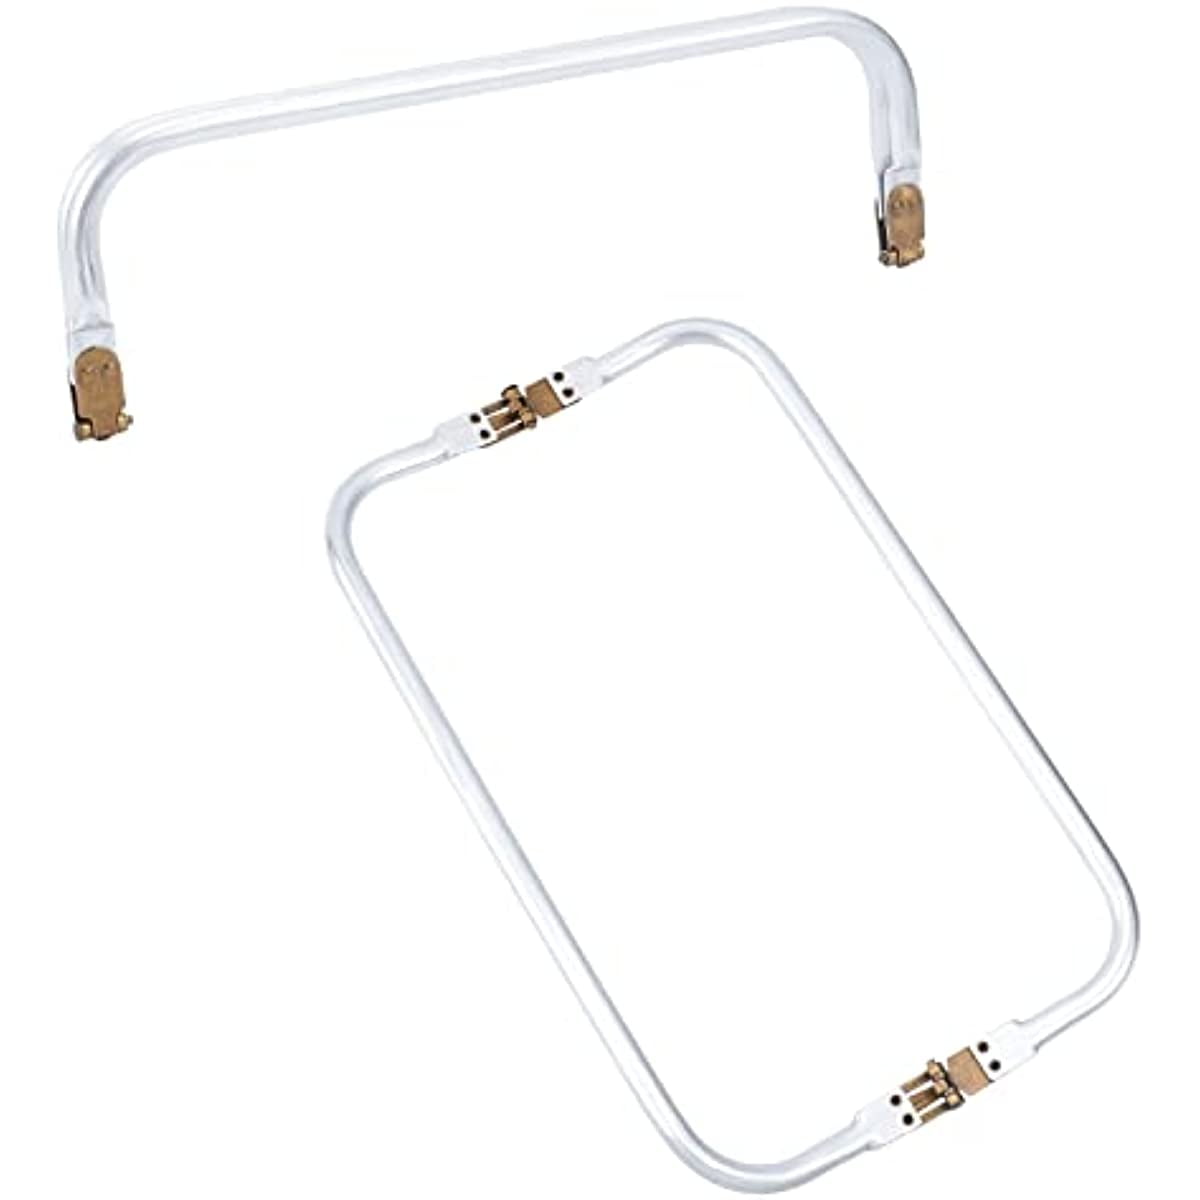 WADORN 2pcs Metal Purse Handles, Semicircle Handbag Handle Frame  Replacement Cluctch Bag Handles DIY Handmade Handles with Screws  6.1×3.6inch Bag